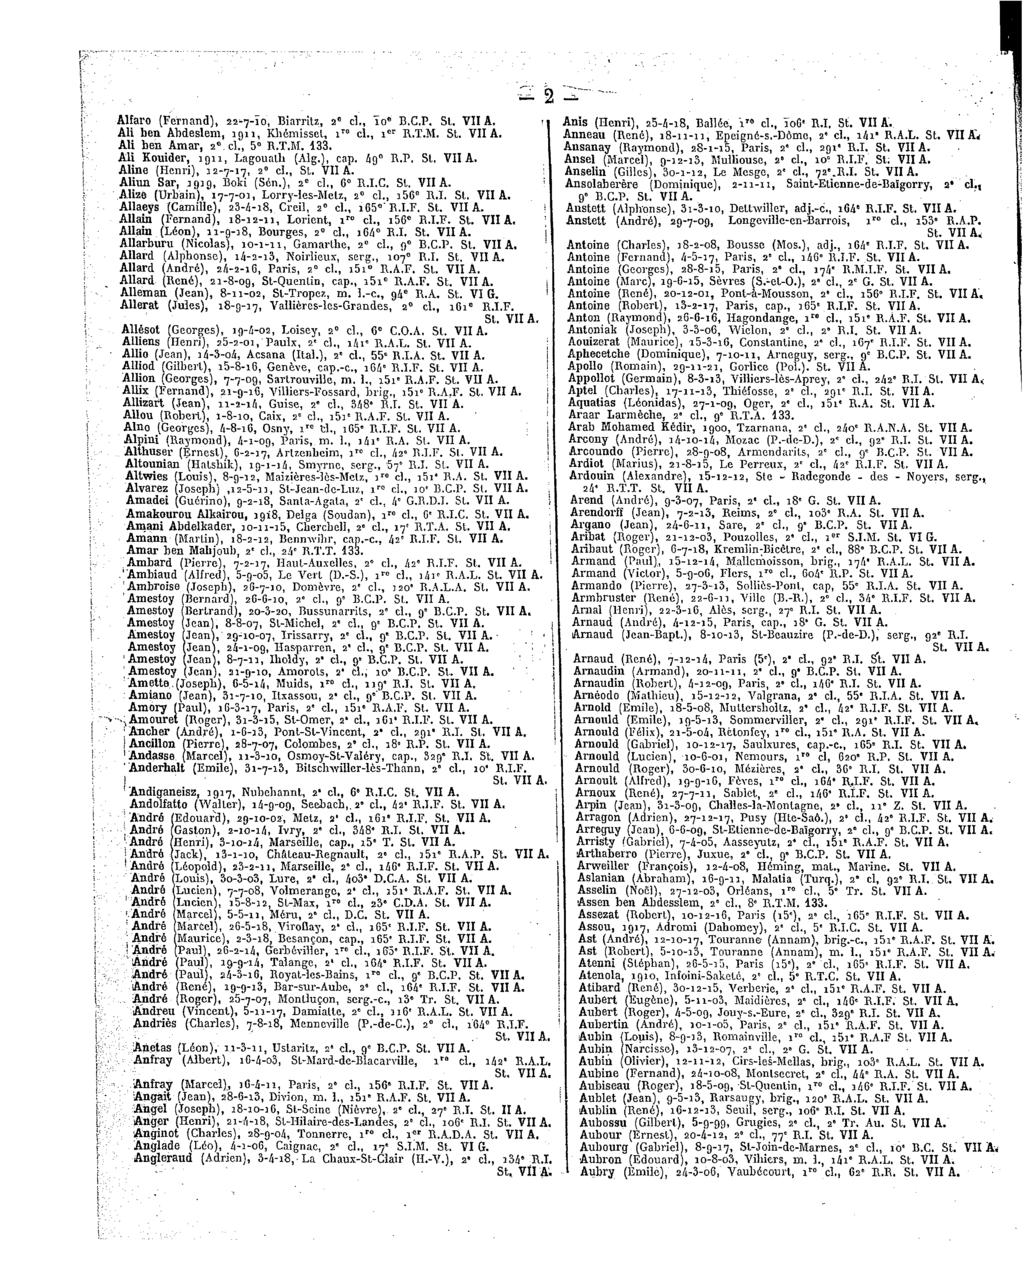 ., -J.ZJT.: Alfaro(Férnand), 22^7-10, Biarritz,20cl,, 10eB.C.P.St.VIIA, r Anis(Henri),25-4-i8,Ballée,1 cl.,106'r.i. AlibenAbdeslem, 1911,Kliémissel, irocl.,1" R.T.MṠt.VIIA. Anneau(René),18-11-11, Epeigné-s.